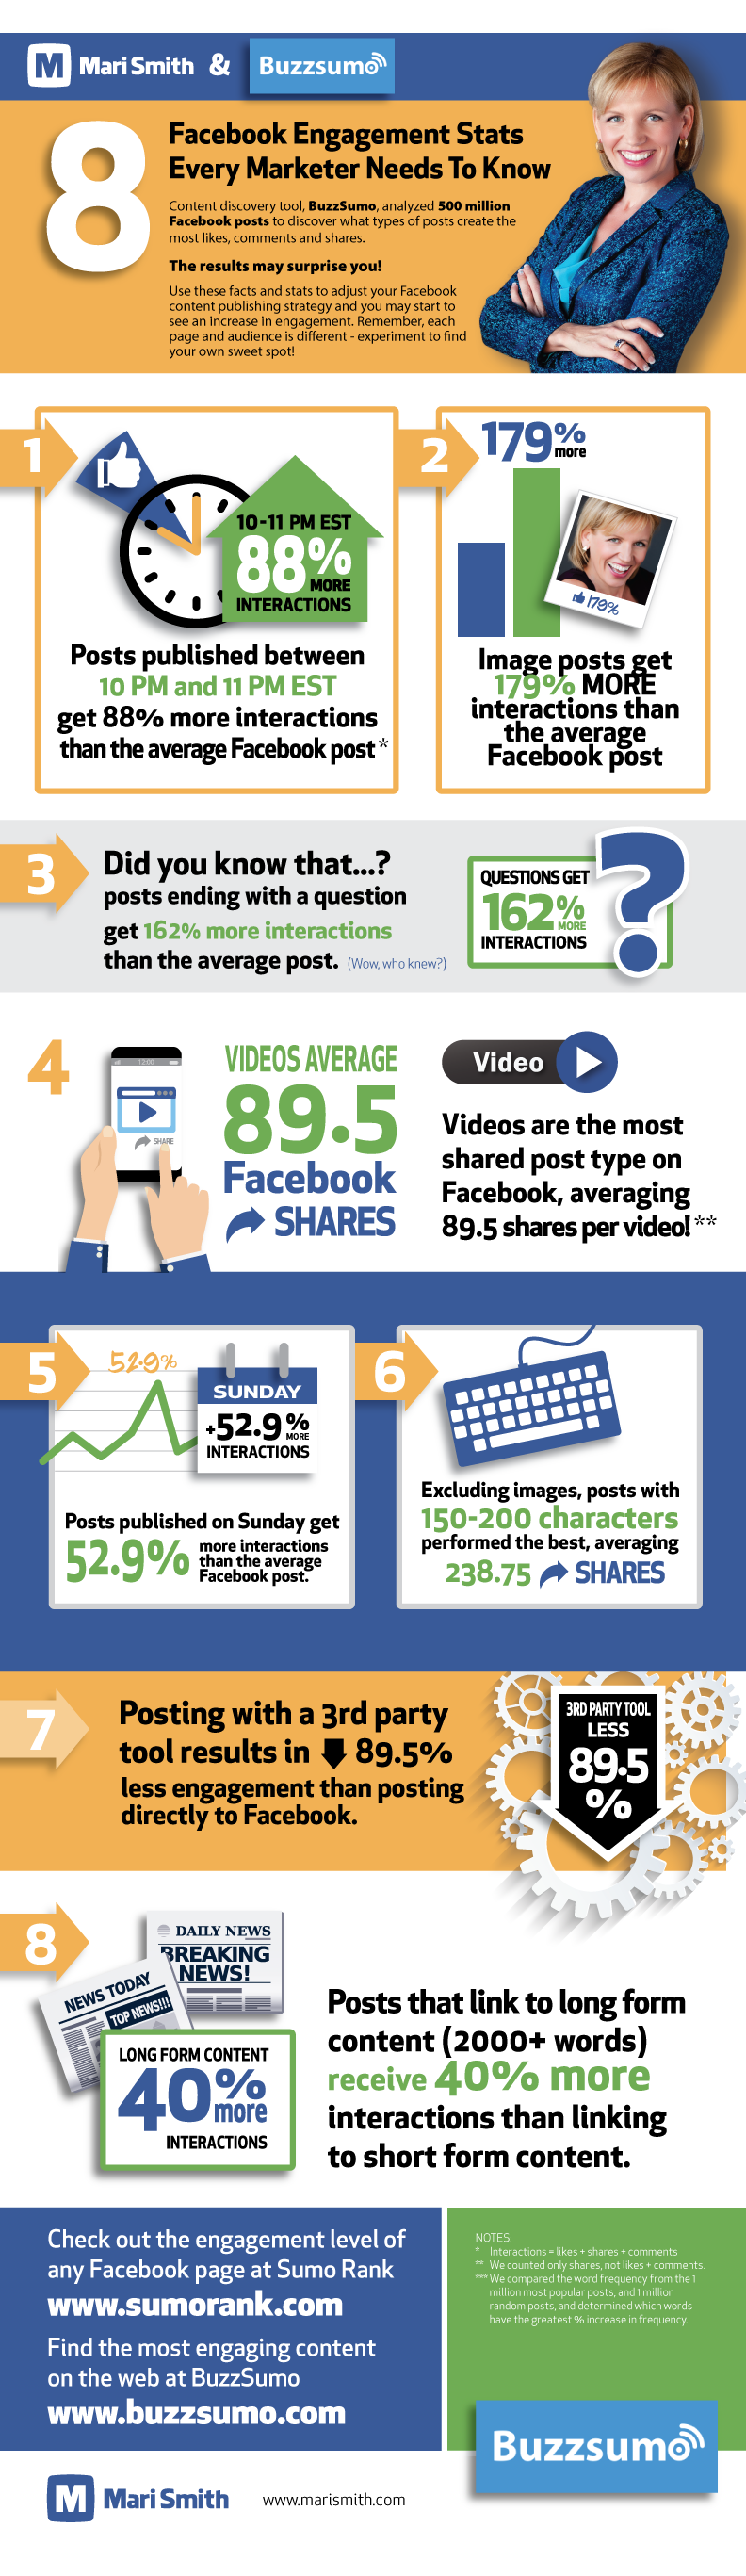 mari smith buzzsumo 8 facebook stats infographic